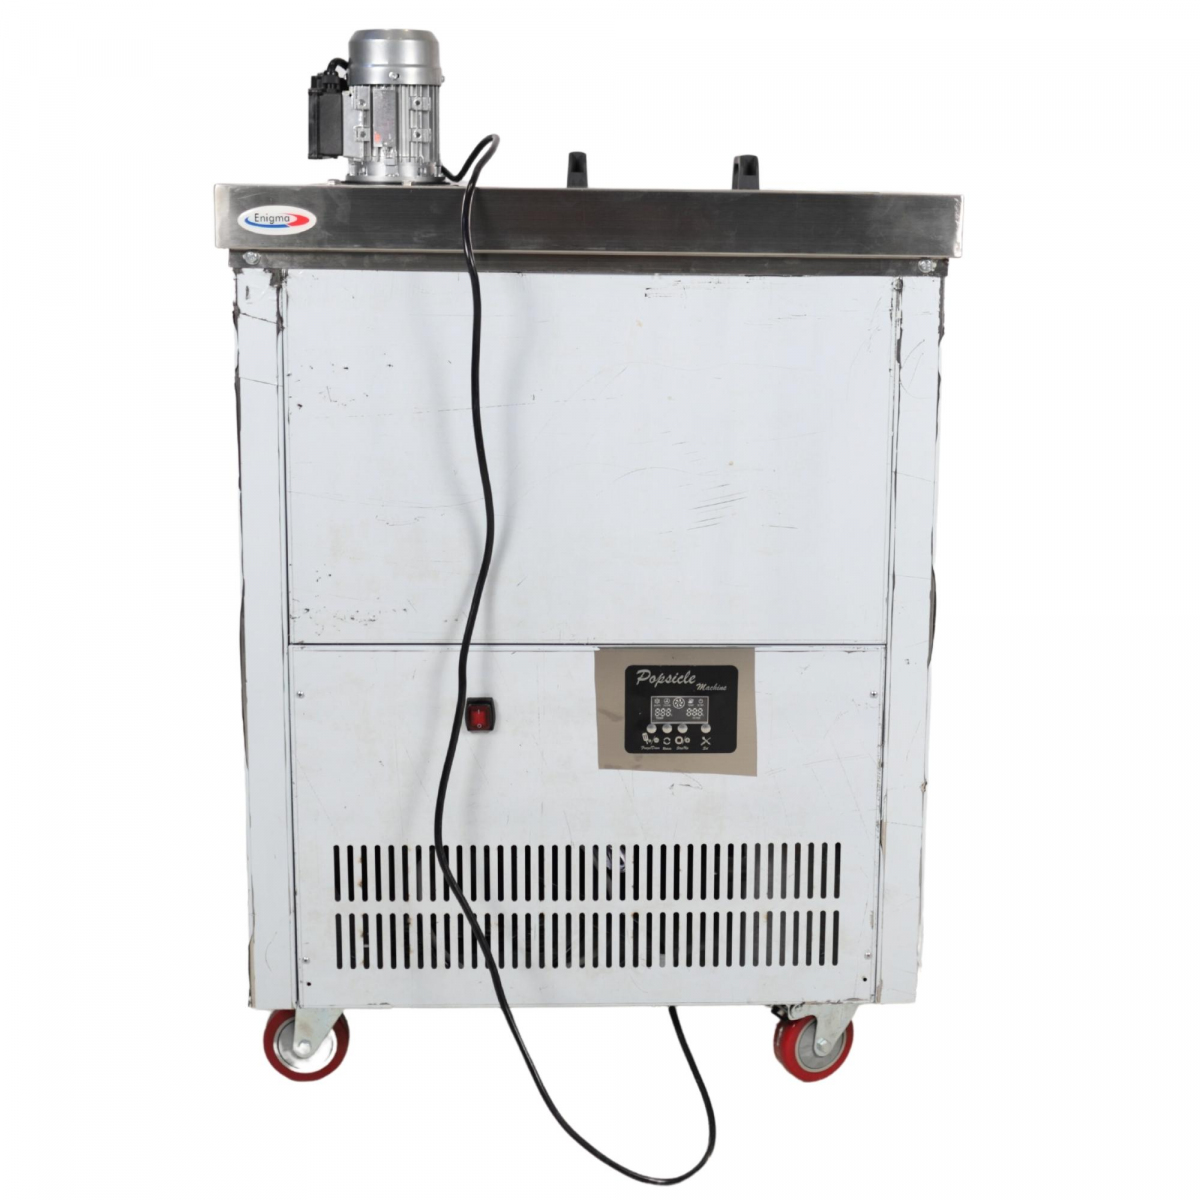 Эскимогенератор (фризер) для производства мороженого на палочке ENIGMA MK-PM80